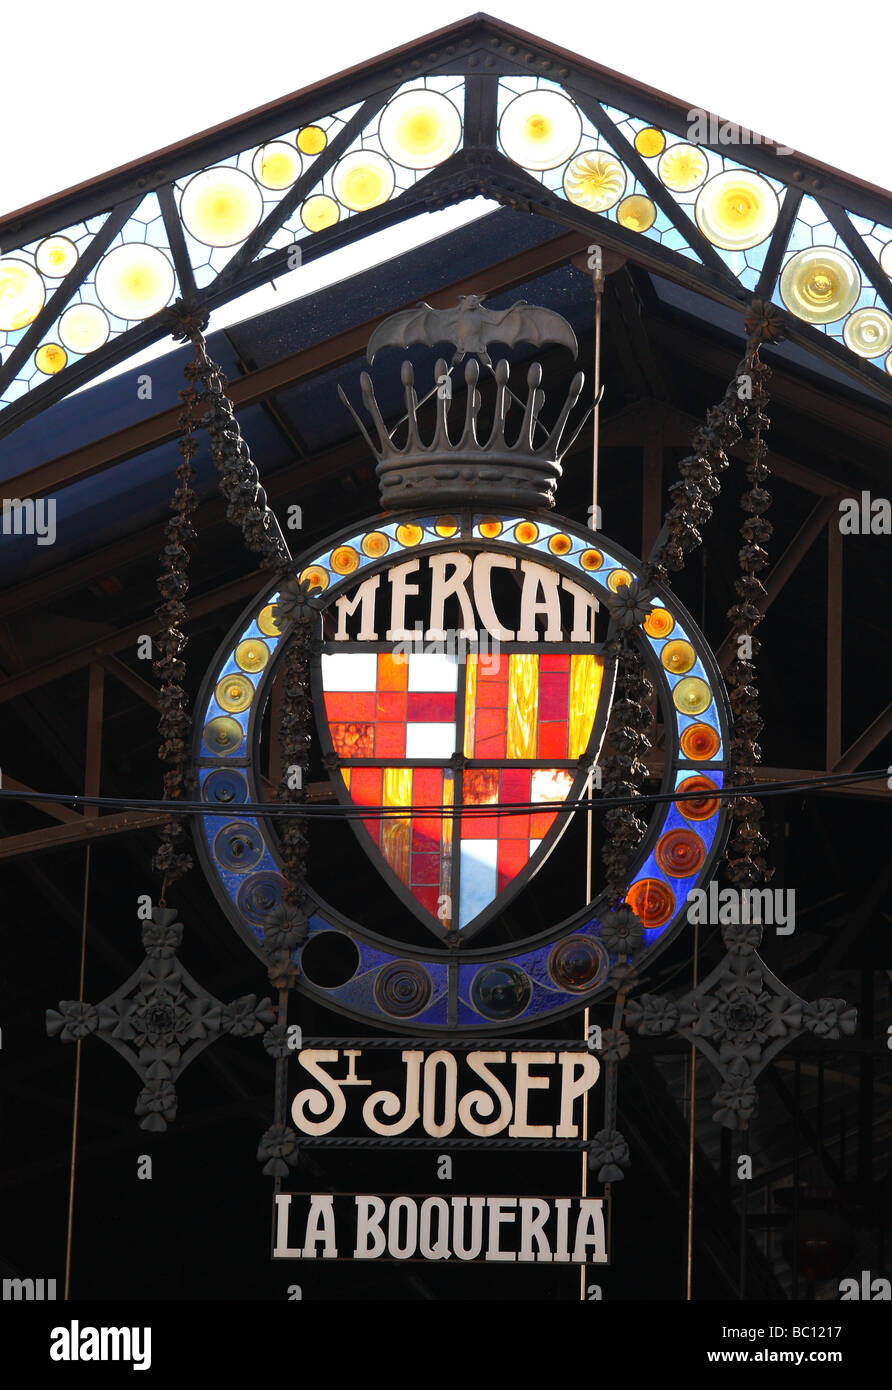 Crest of Mercat St Josep La Boqueria Barcelona Catalunya Spain Stock Photo